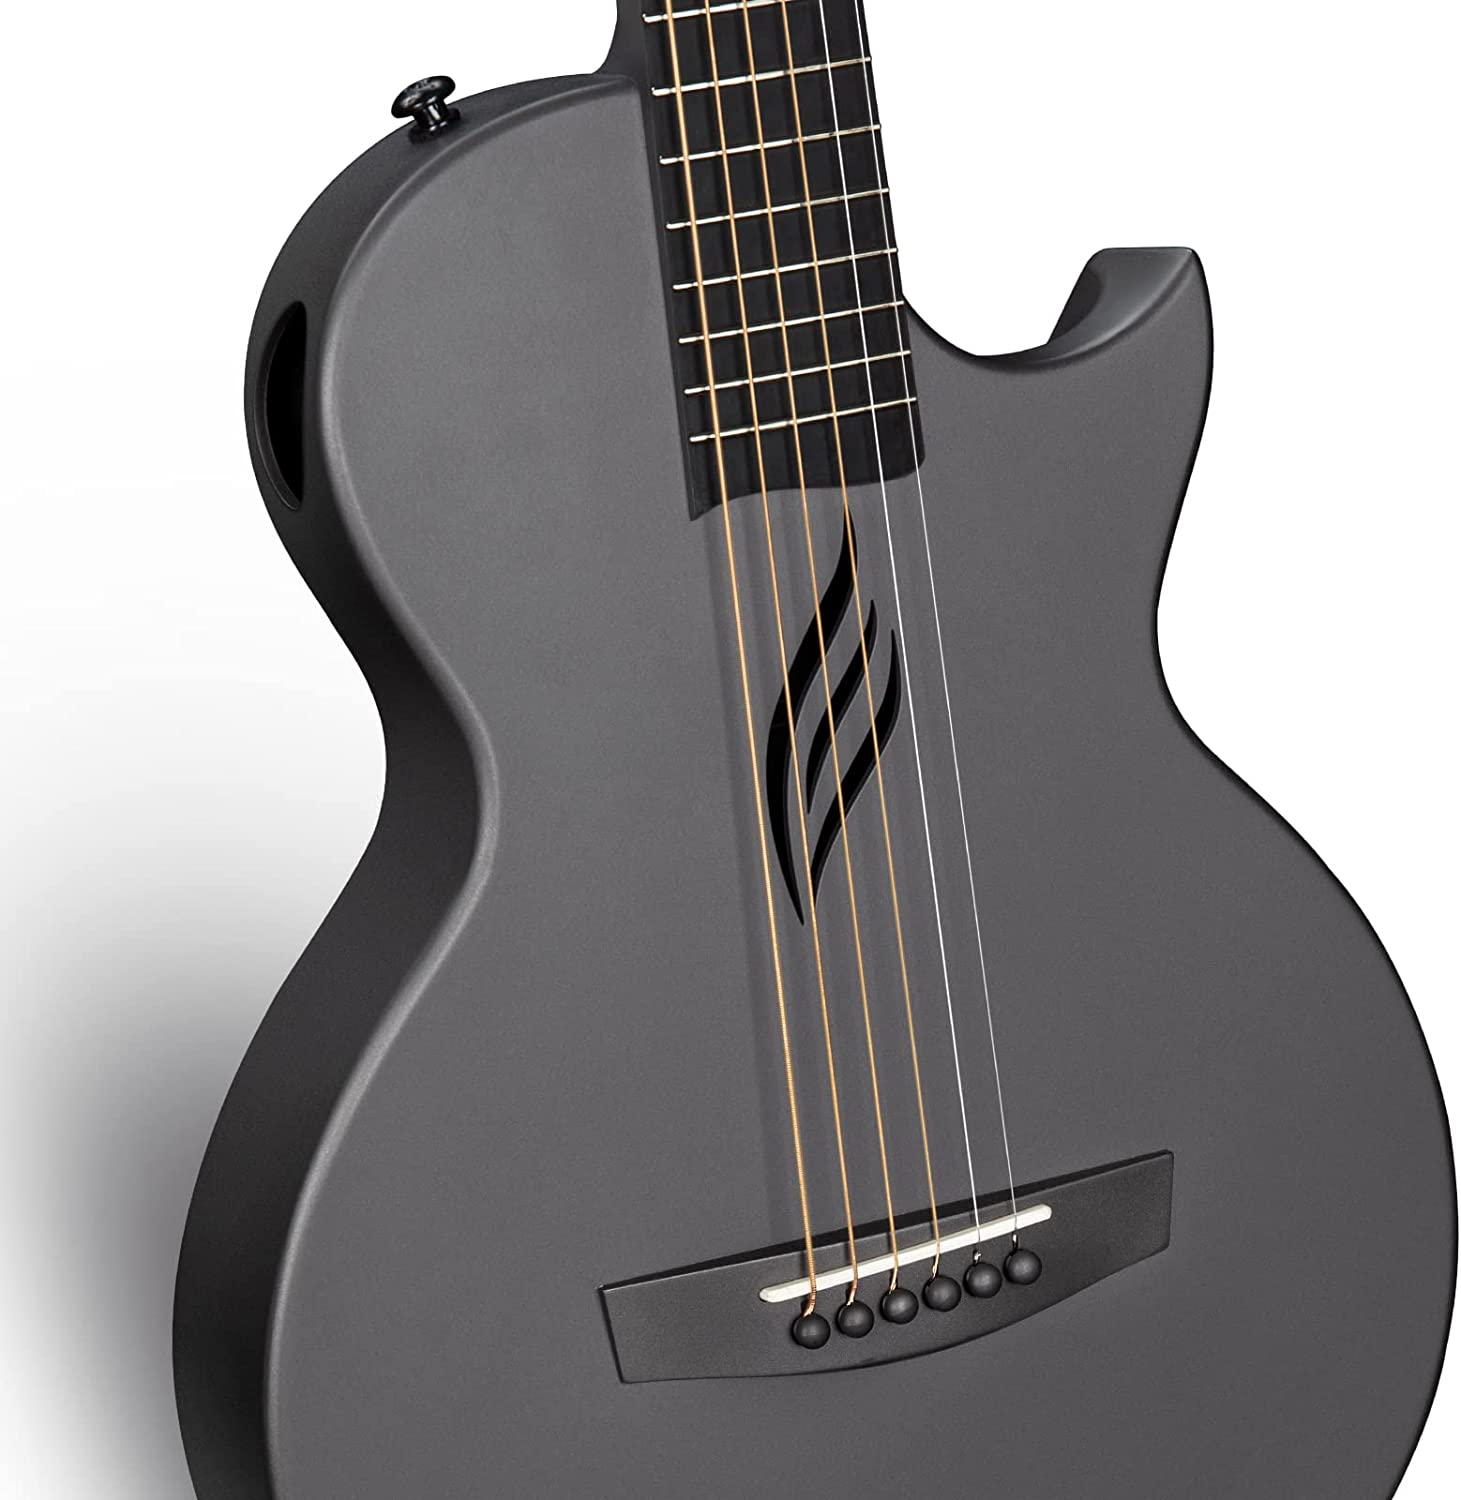 گیتار آکوستیک فیبر کربن Enya Nova Go Carbon Fiber Acoustic Guitar - ارسال ۱۰ الی ۱۵ روز کاری